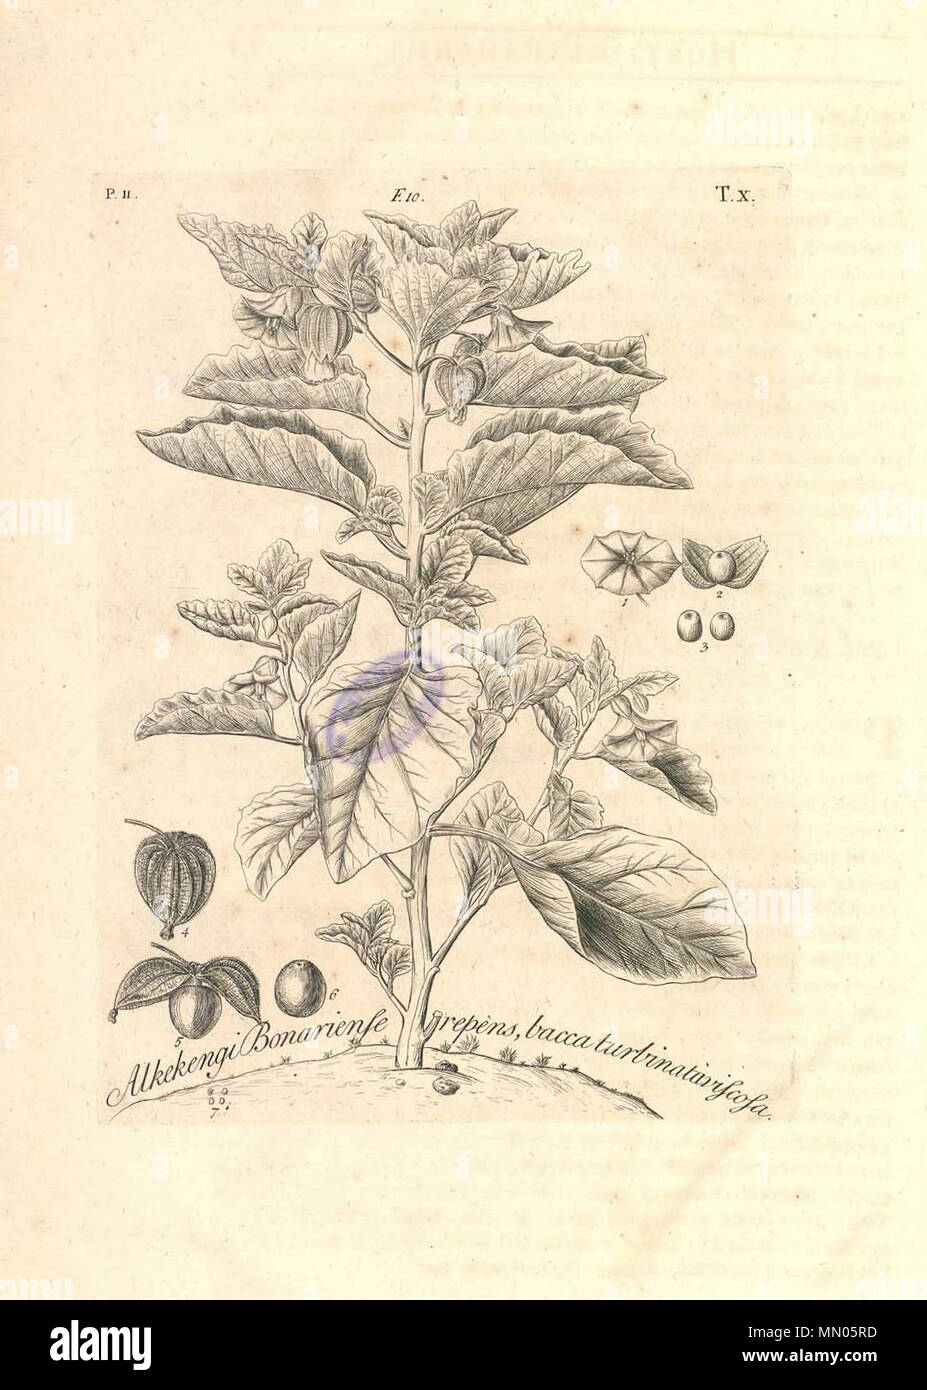 . English: Dillenius, J.J. (1732), Hortus Elthamensis plate 9, depicting Alkekengi Bonariense repens, bacca turbinataviscosa, the Grape-Groundcherry, now know as Physalis viscosa L. Nederlands: Dillenius, J.J. (1732), Hortus Elthamensis plaat 9, met een afbeelding van Alkekengi Bonariense repens, bacca turbinataviscosa, tegenwoordig bekend als Physalis viscosa L. Deutsch: Dillenius, J.J. (1732), Hortus Elthamensis Tafel 9, mit einer Darstellung von Alkekengi Bonariense repens, bacca turbinataviscosa, jetzt bekannt als Physalis viscosa L. Français : Dillenius, J.J. (1732), Hortus Elthamensis la Stock Photo